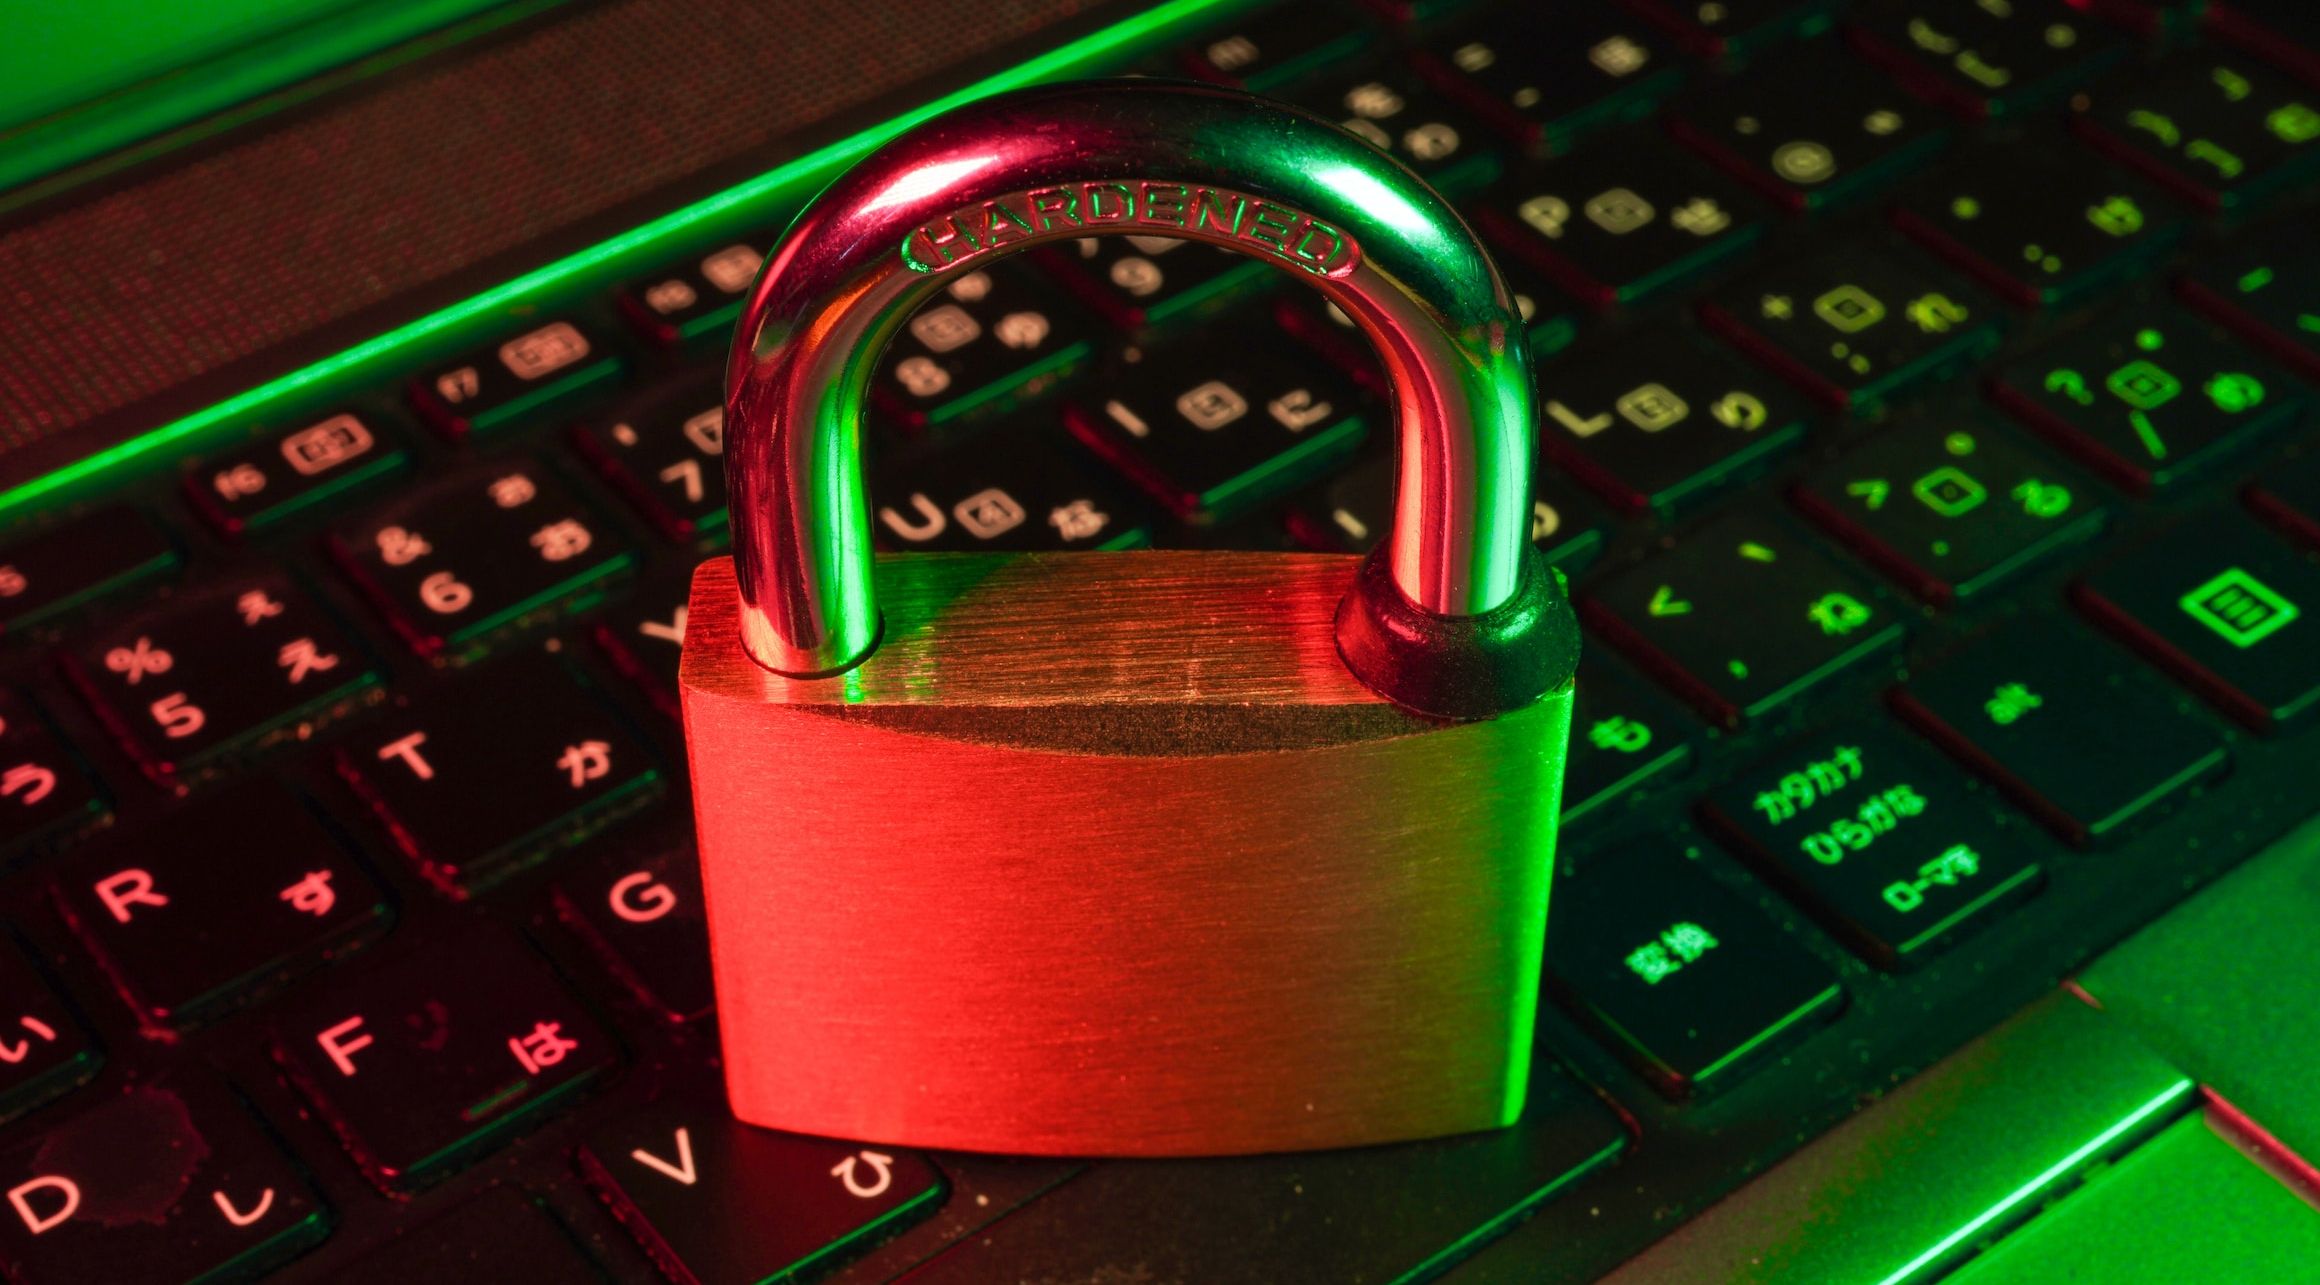 image of padlock sat on laptop keyboard under red and green lighting